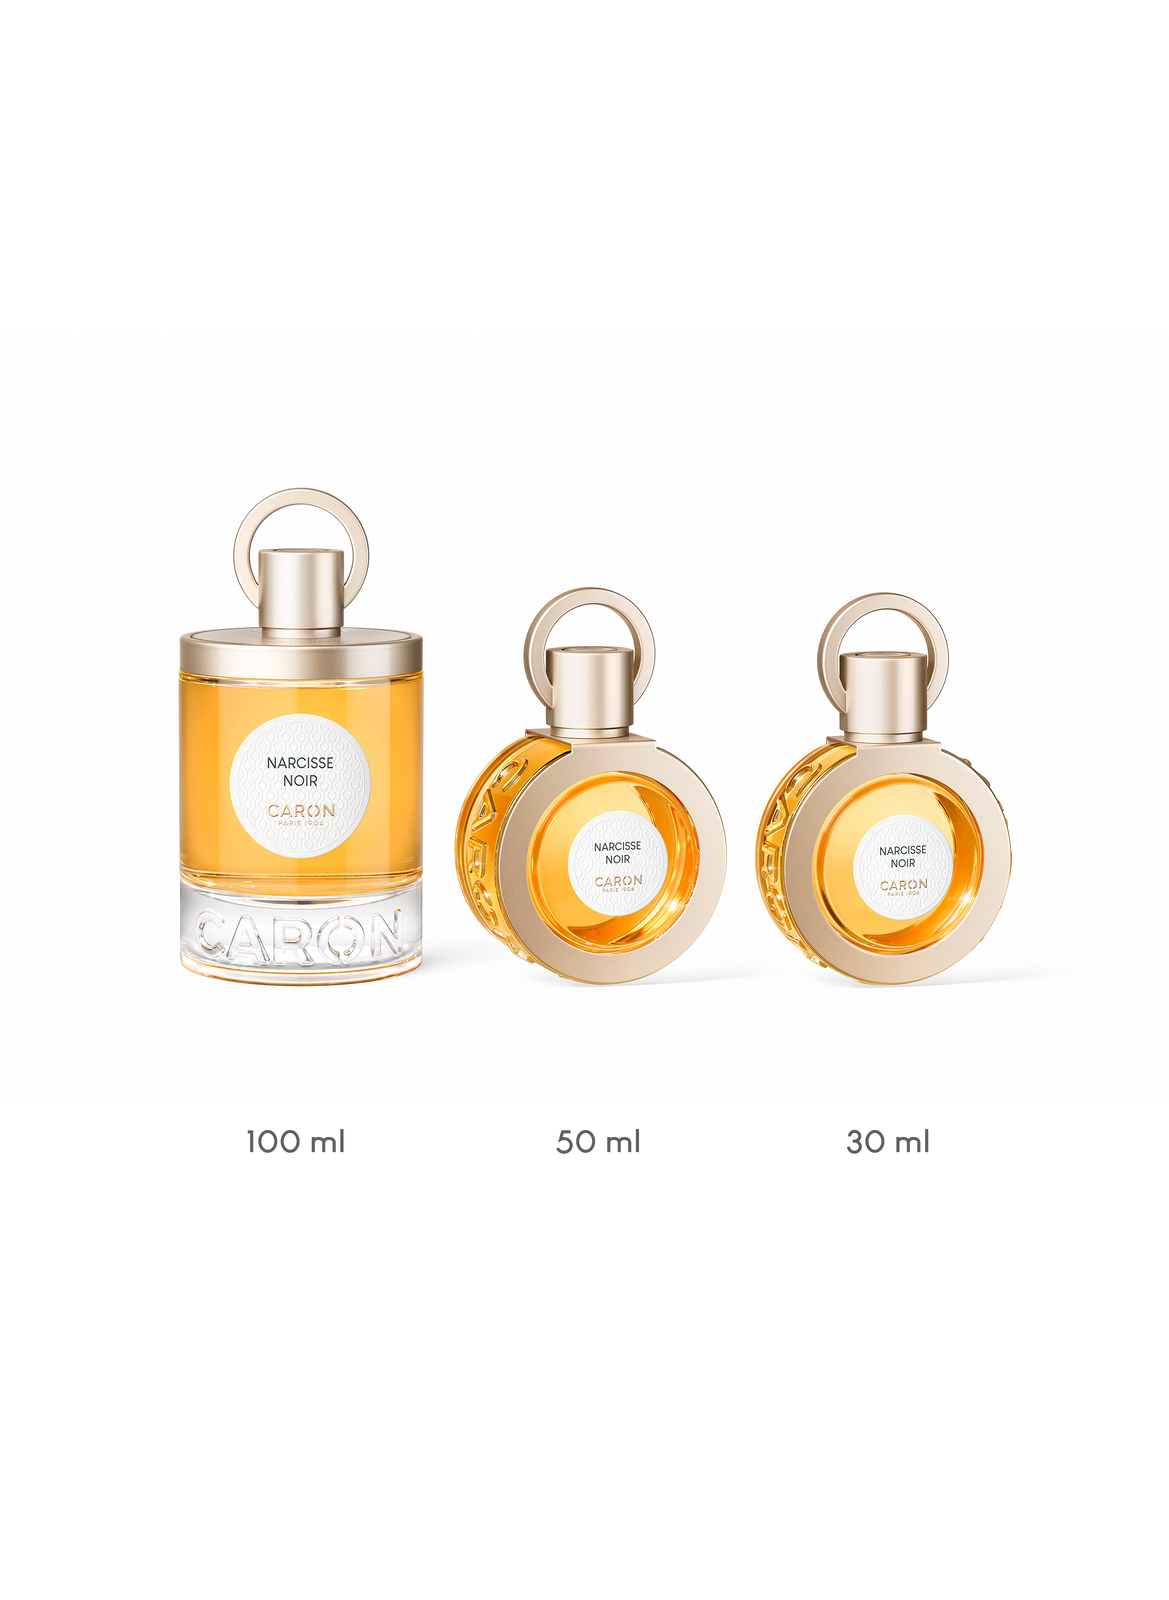 CARON Narcisse Noir Perfume 50ml Refillable